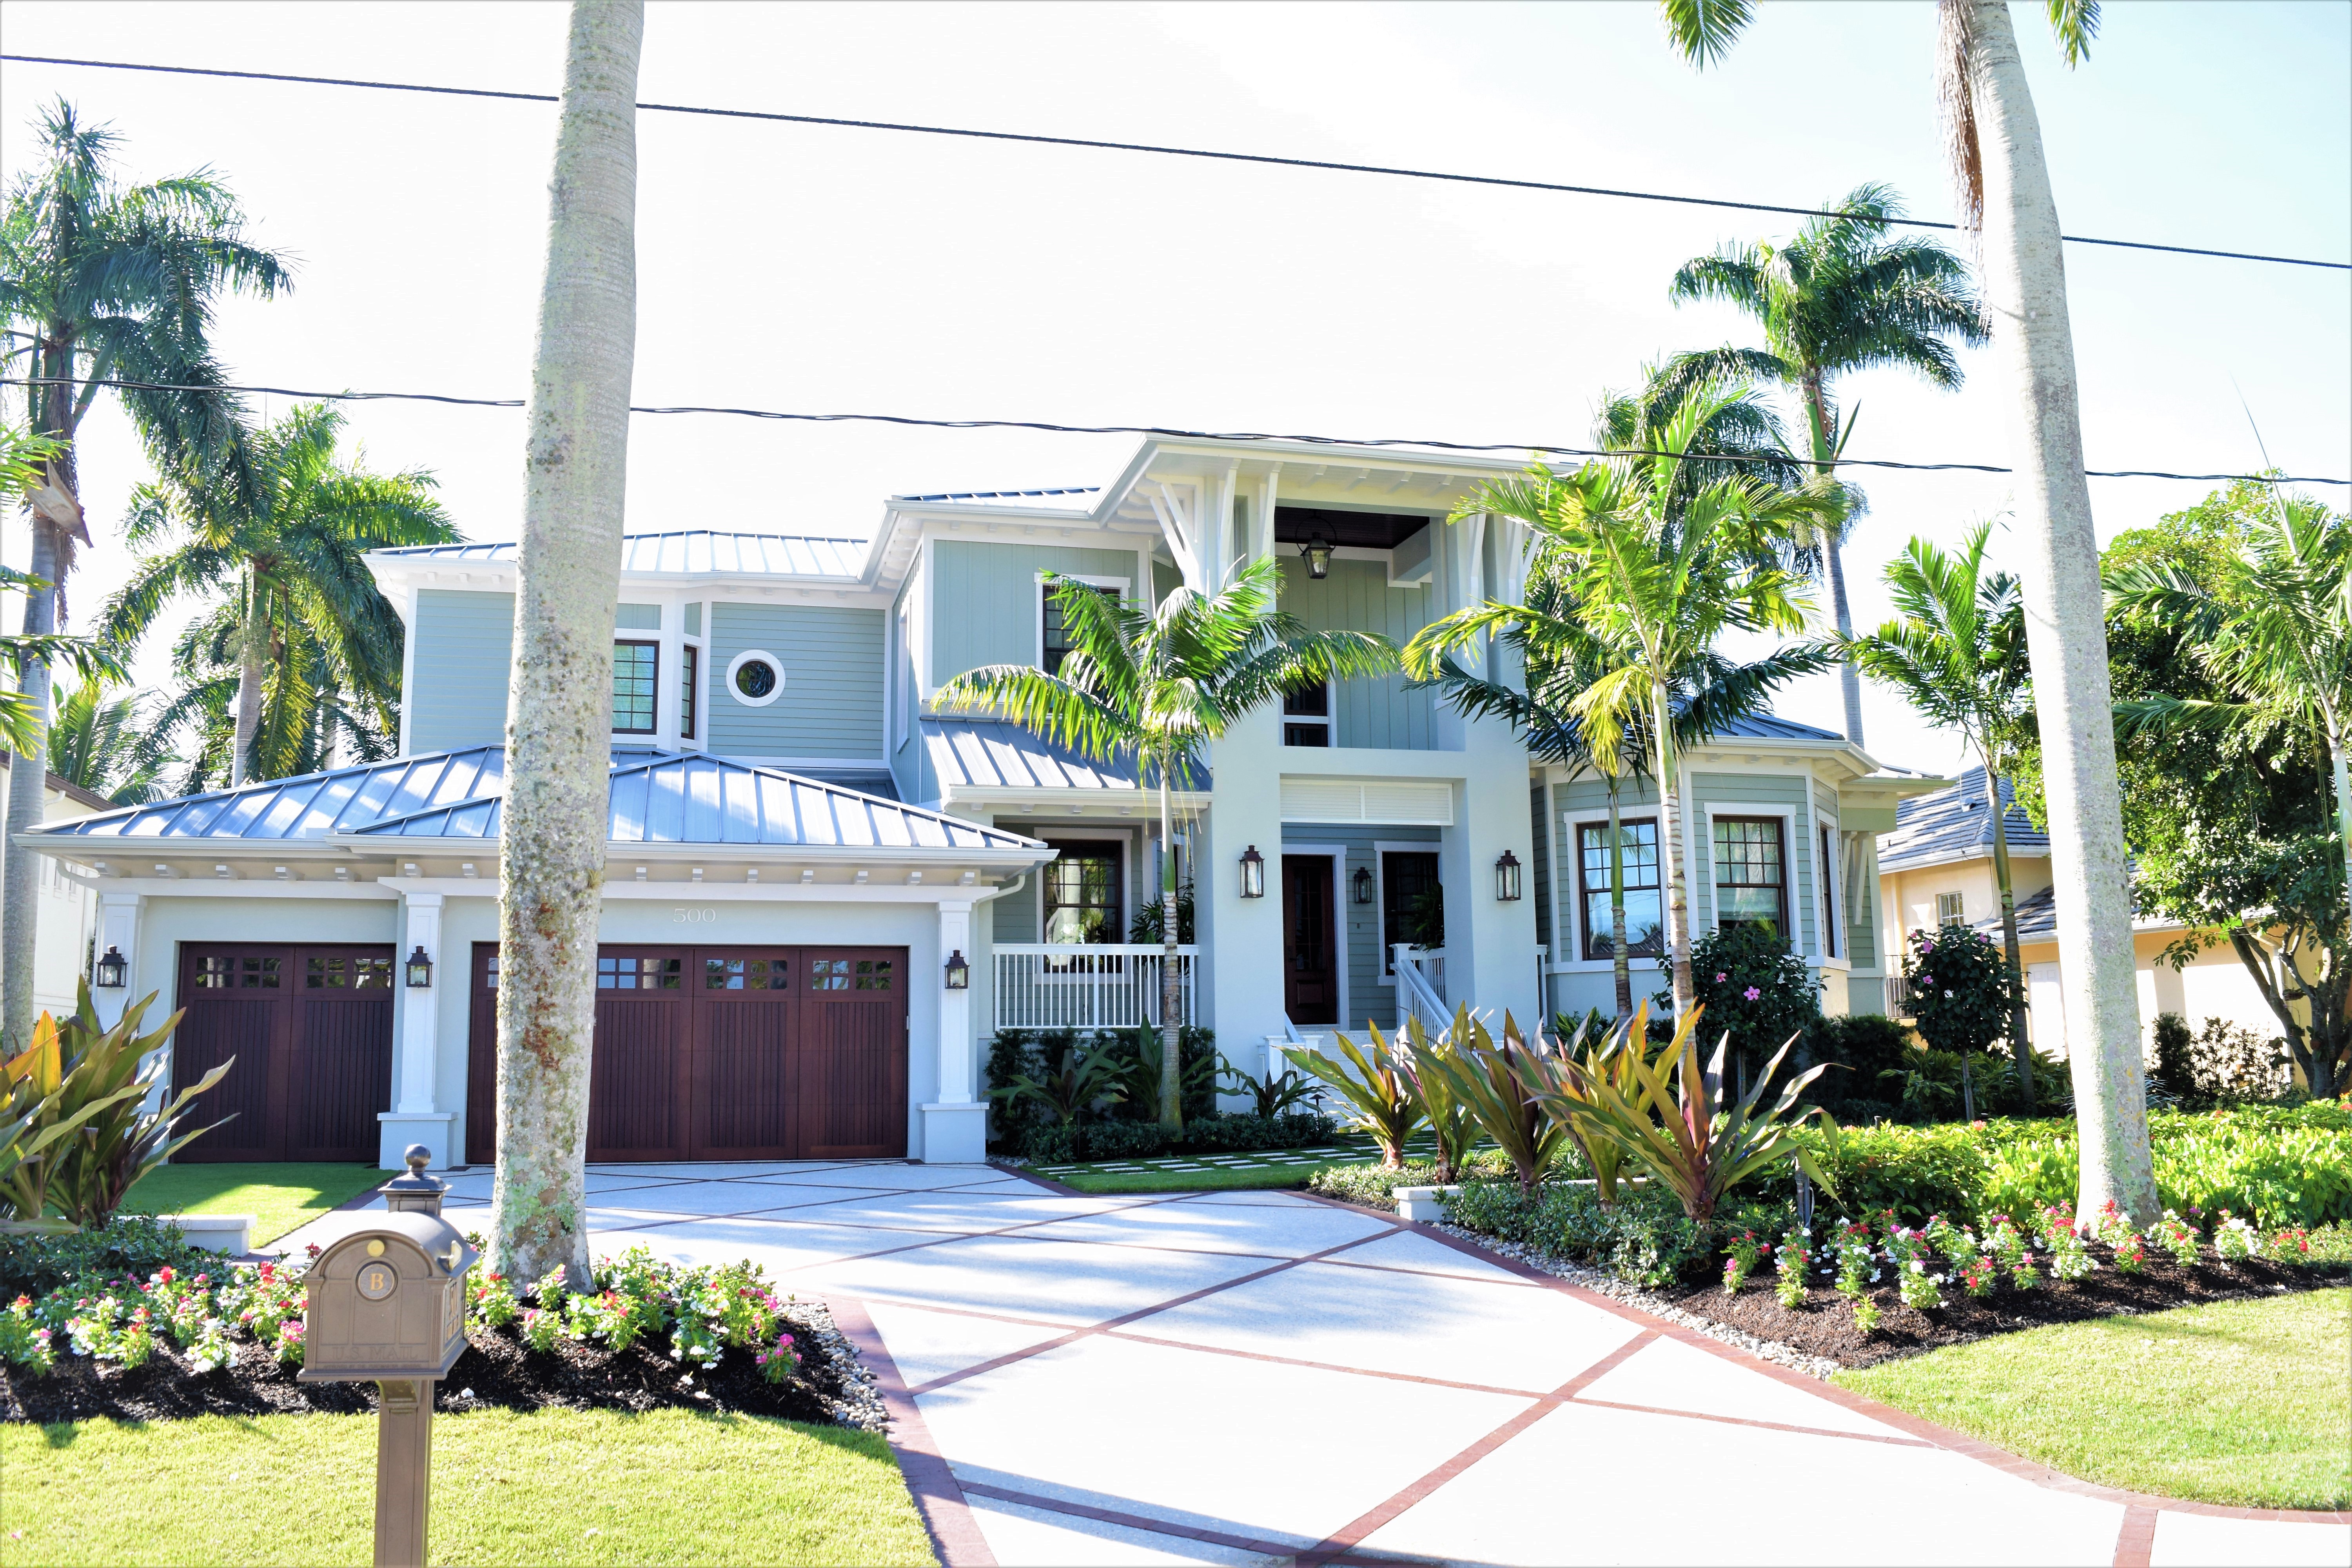 Residential Property Management in Bonita Springs FL